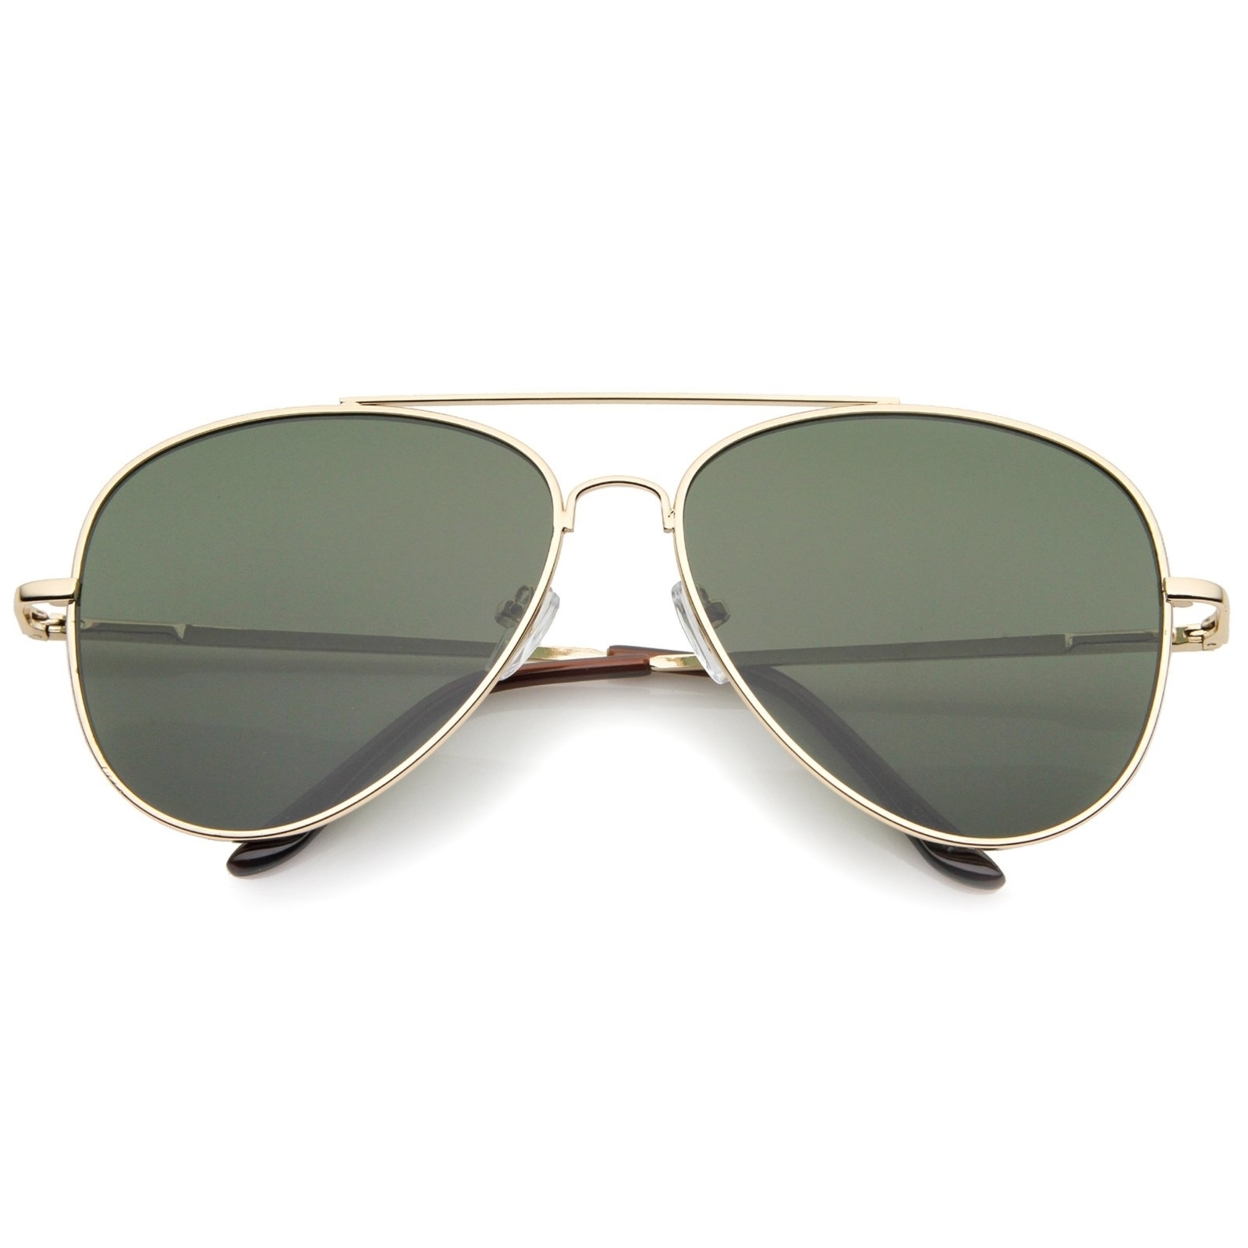 Large Classic Full Metal Teardrop Flat Lens Aviator Sunglasses 60mm - Silver / Lavender